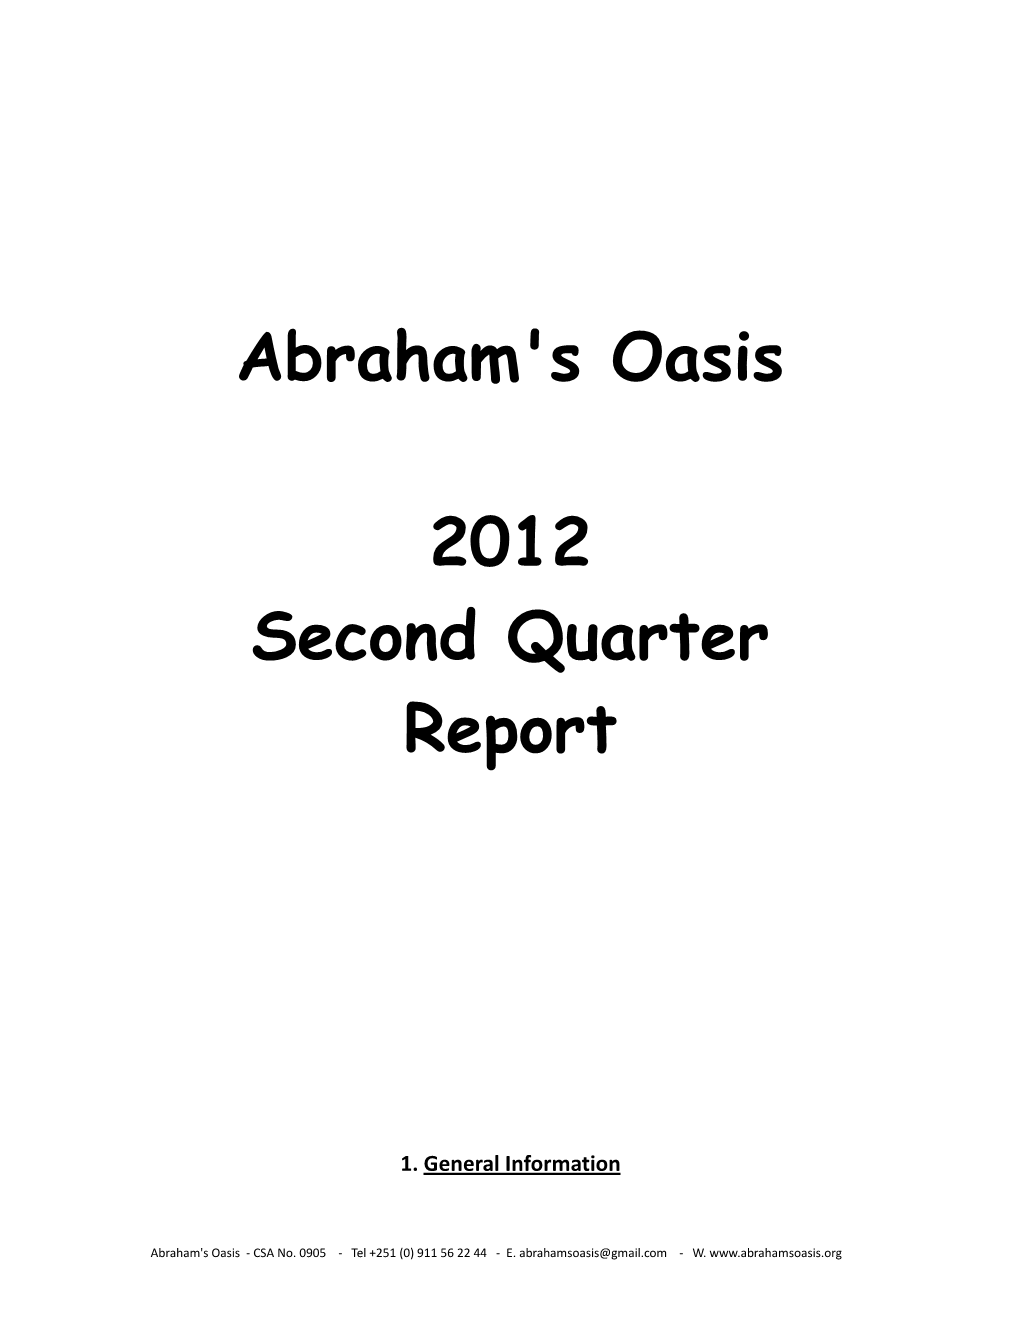 Abraham's Oasis 2012 Second Quarter Report